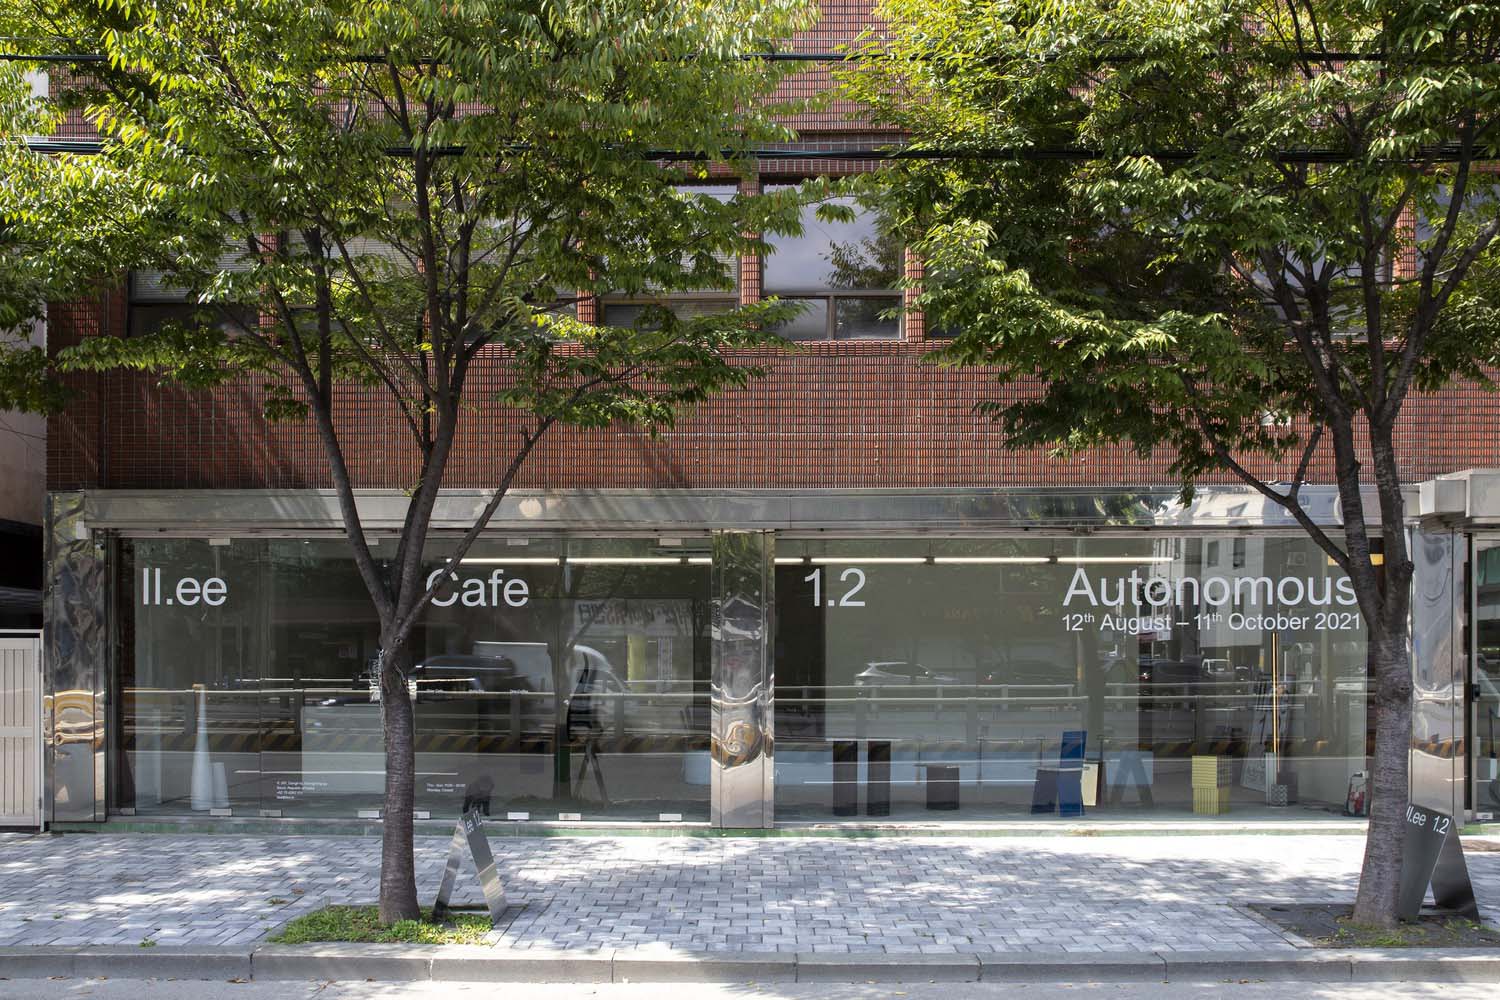 SUBTEXT,咖啡厅设计案例,咖啡店设计,韩国,83㎡,极简风格咖啡厅,咖啡厅设计方案,Il.ee Café,极简主义